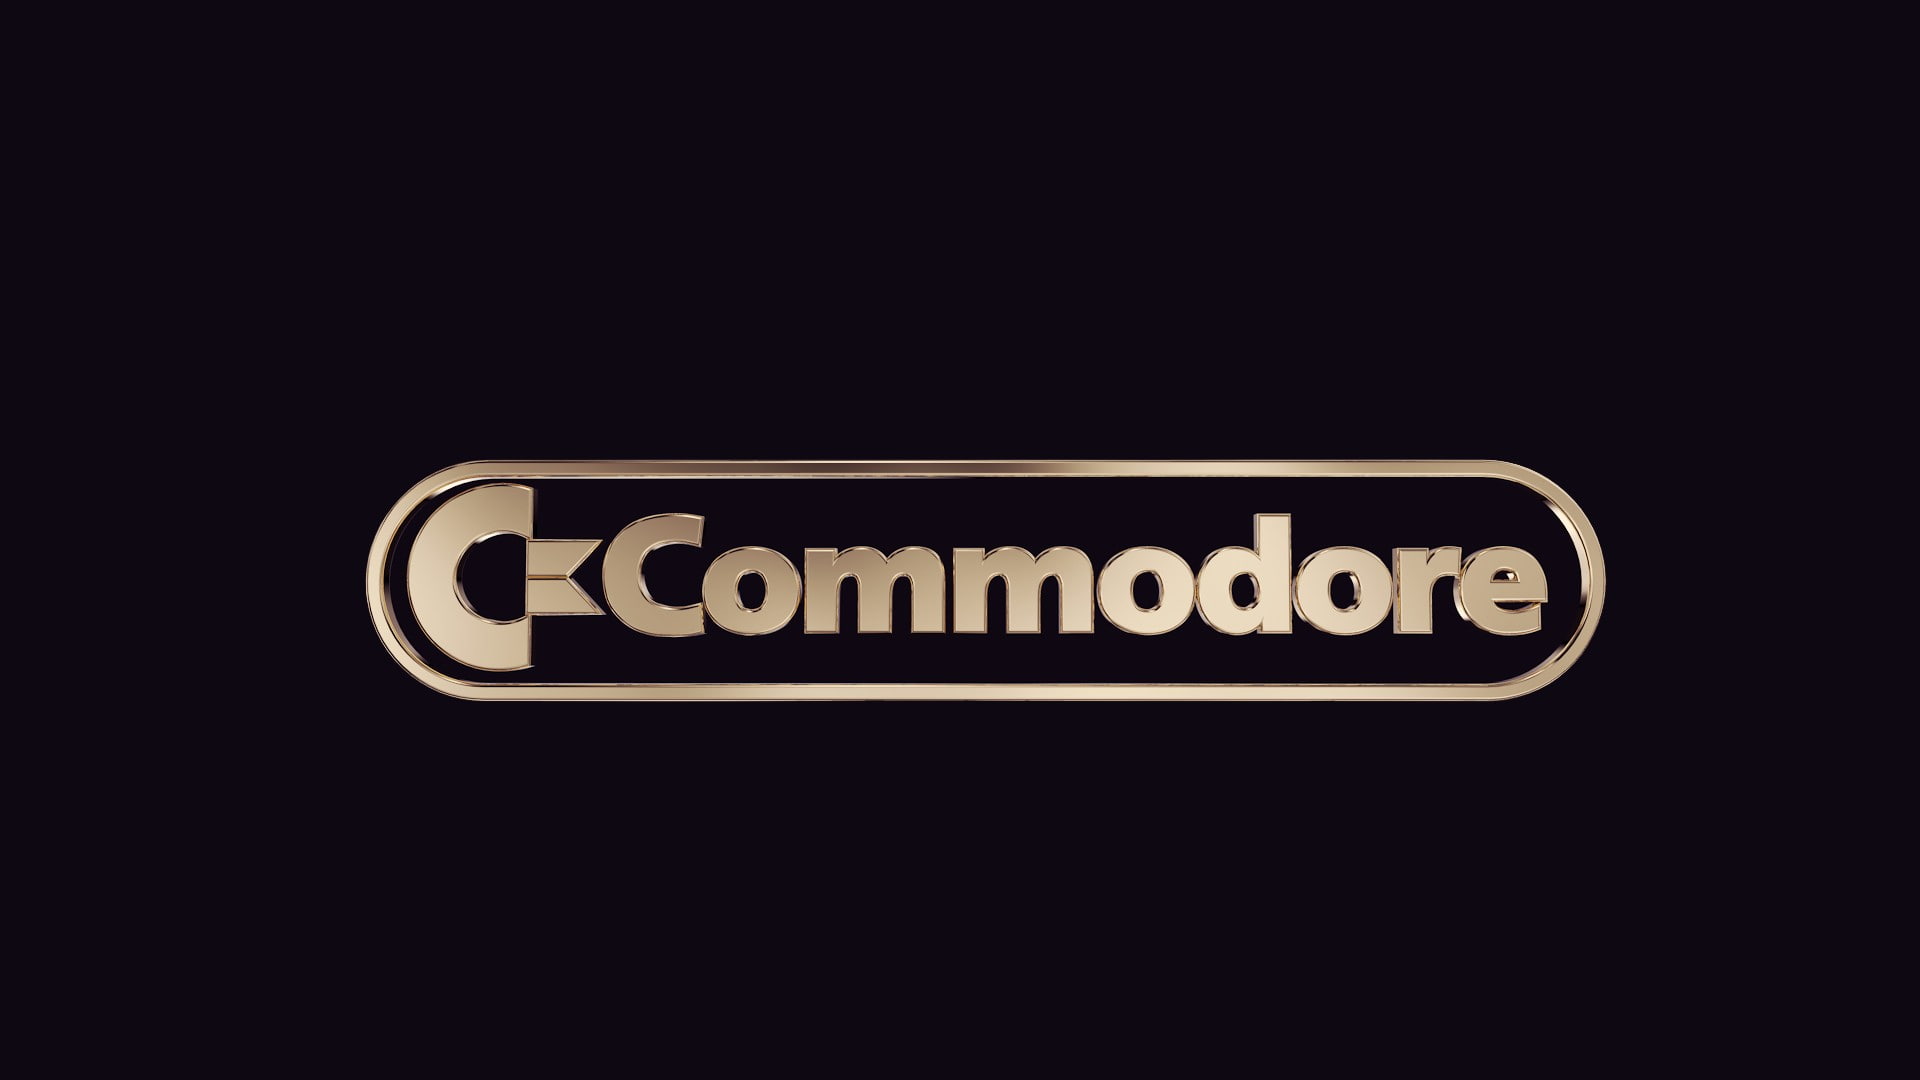 Commodore, Commodore 64, text, communication, black background